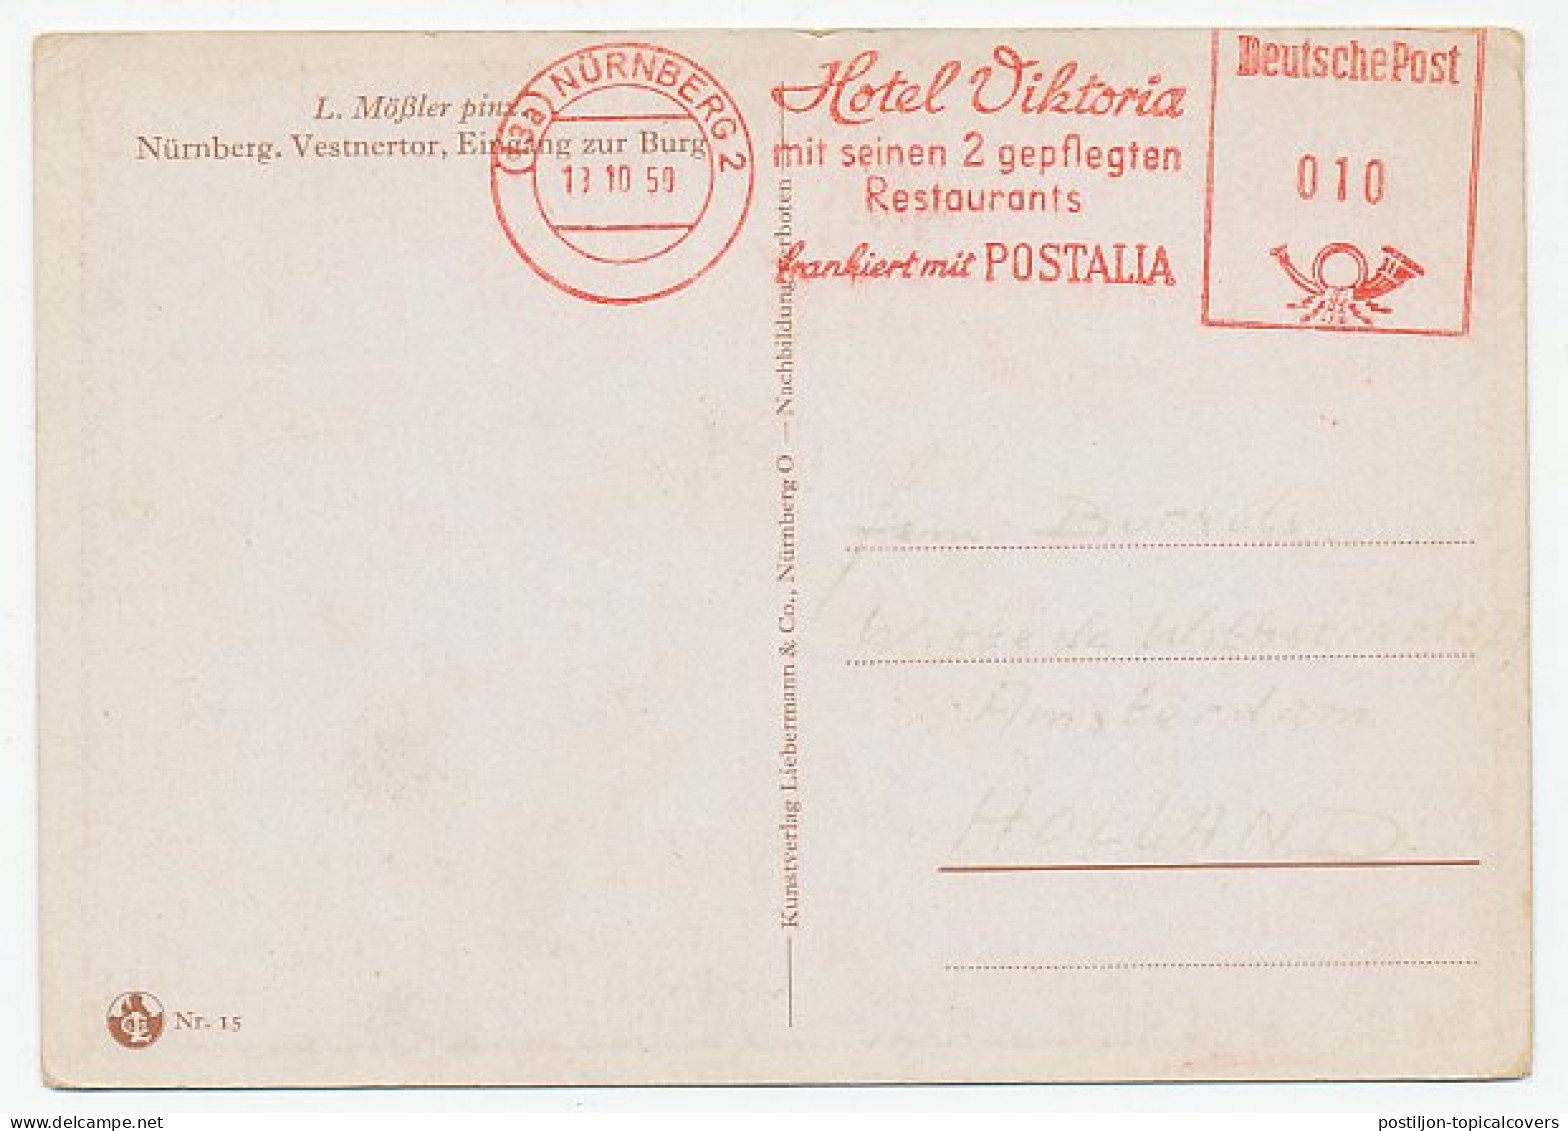 Meter Postcard Germany 1950 Franked With Postalia - Hotel Victoria - Vignette [ATM]